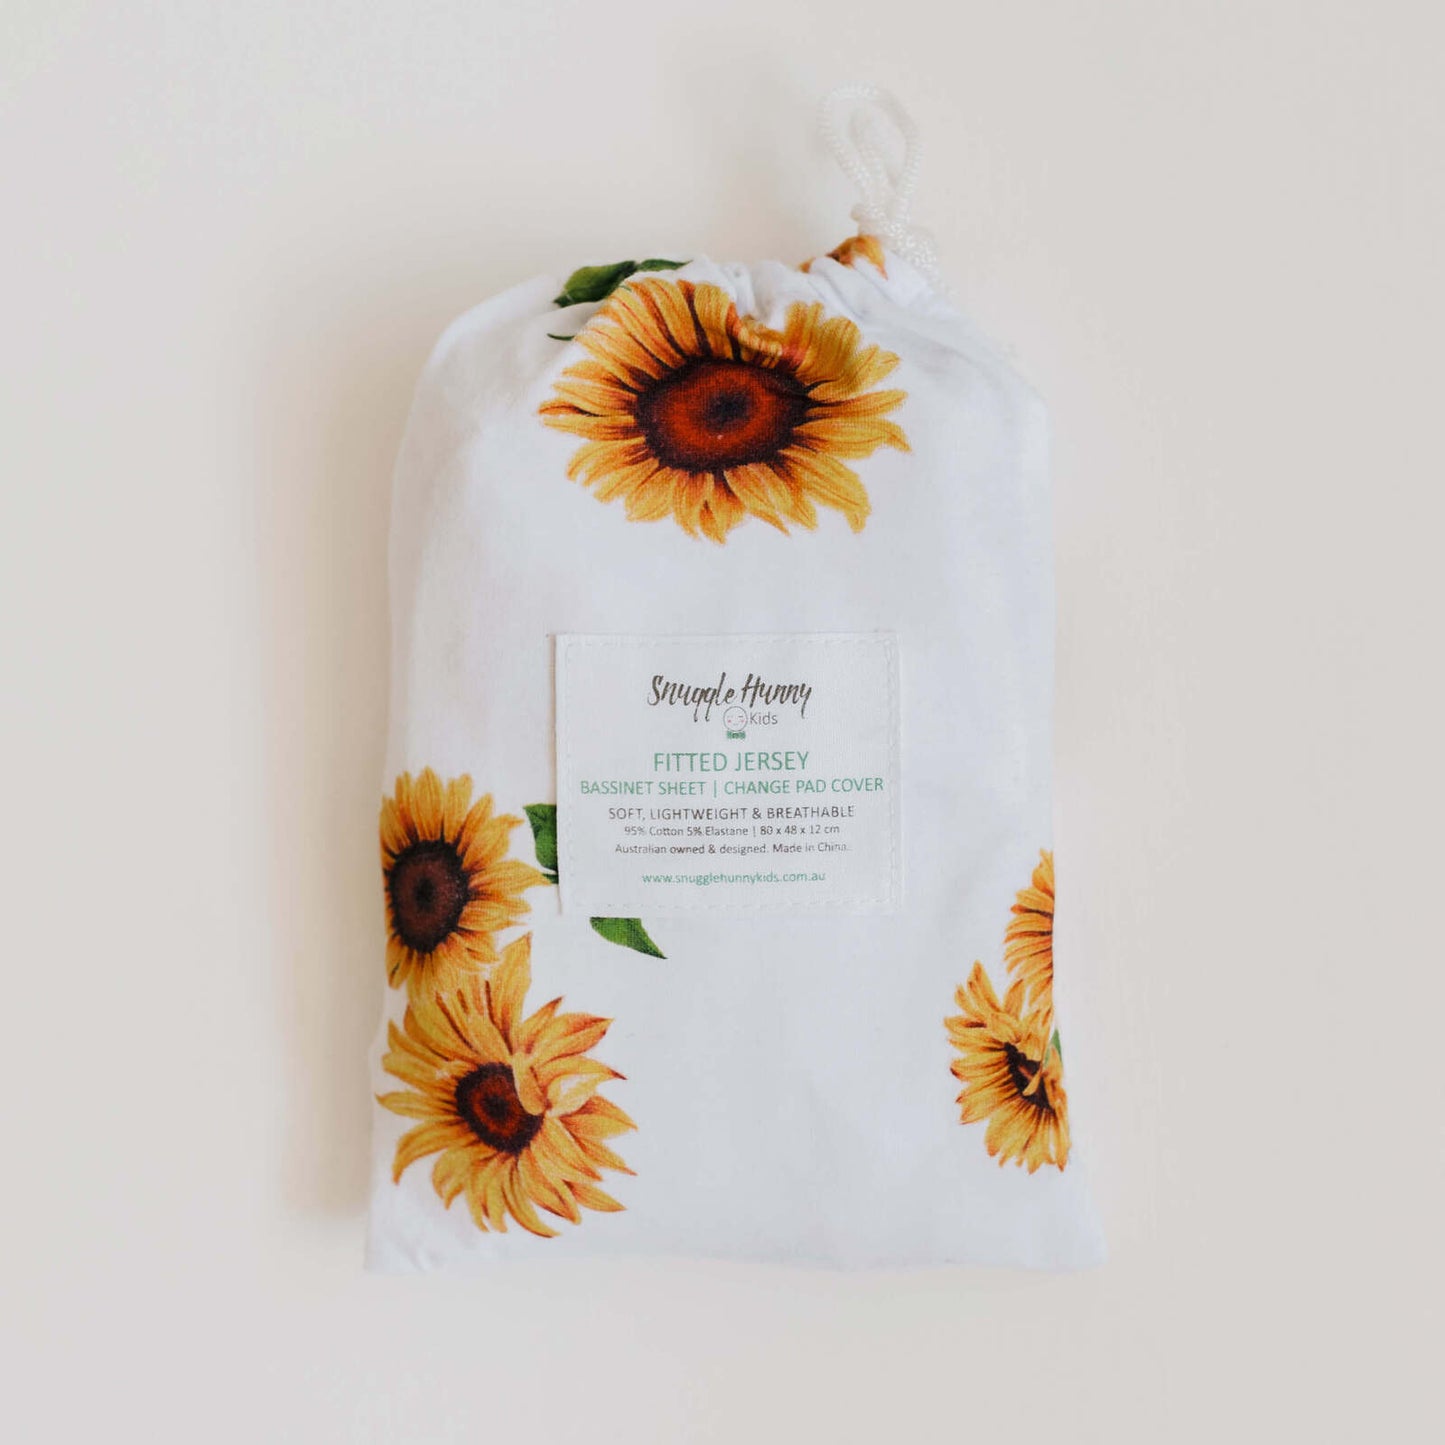 Snuggle Hunny Bassinet Sheet / Change Pad Cover - Sunflower